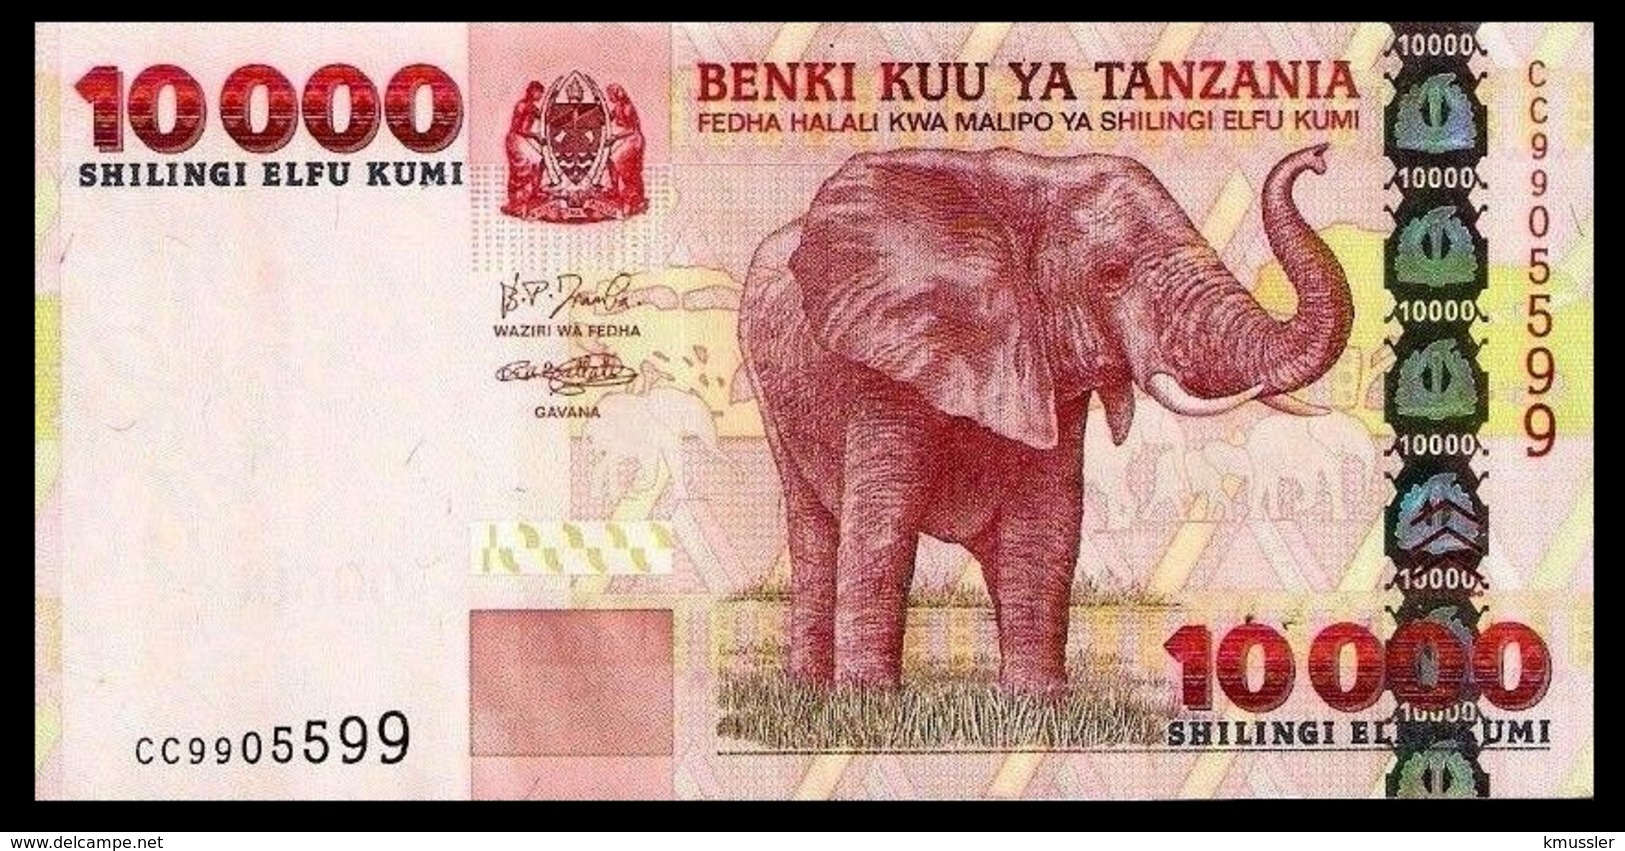 # # # Banknote Tansania (Tanzania) 10.000 Shillingi UNC # # # - Tansania